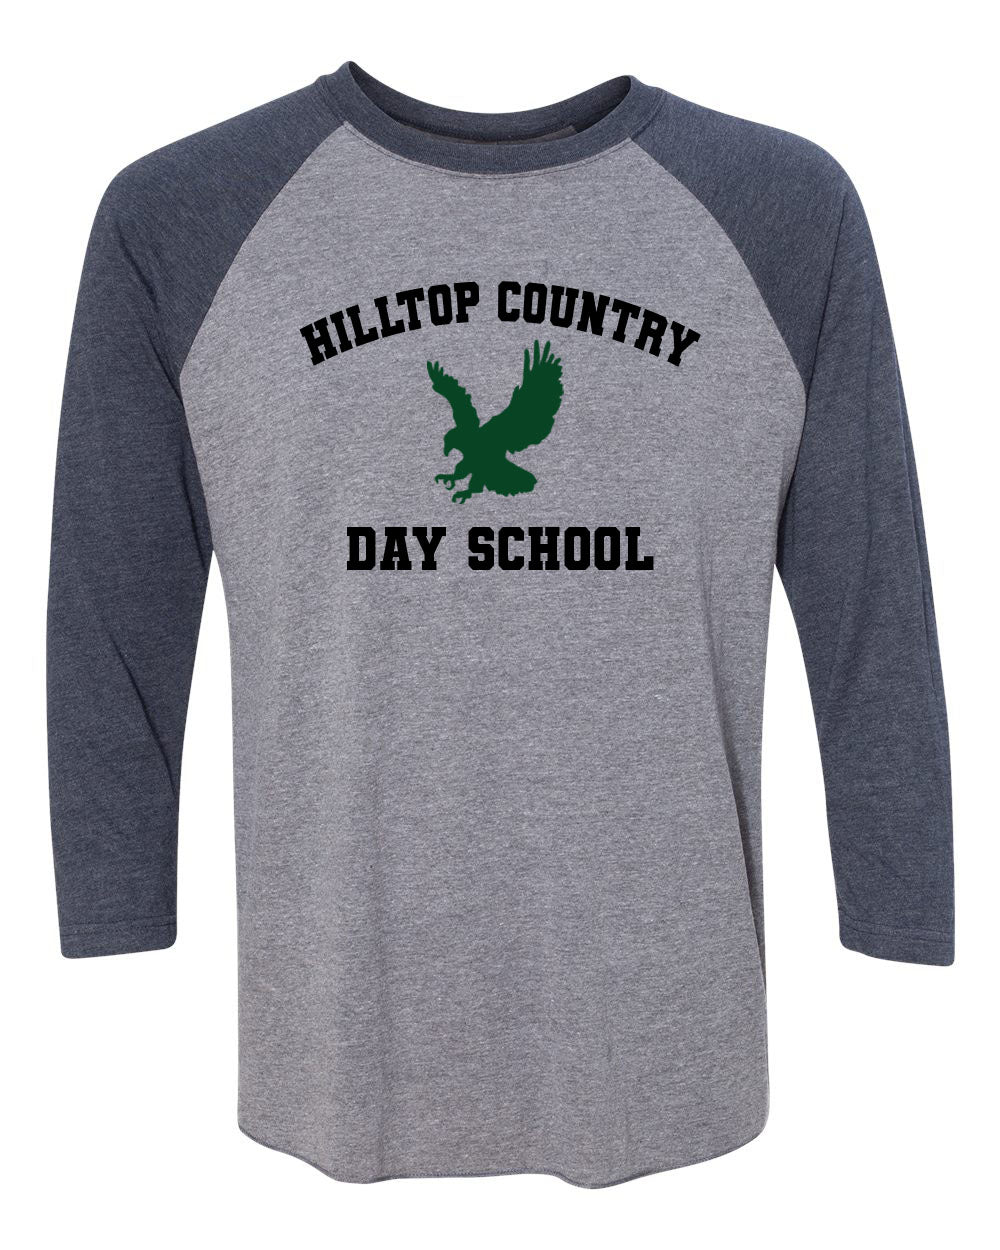 Hilltop Country Day School design 1 raglan shirt